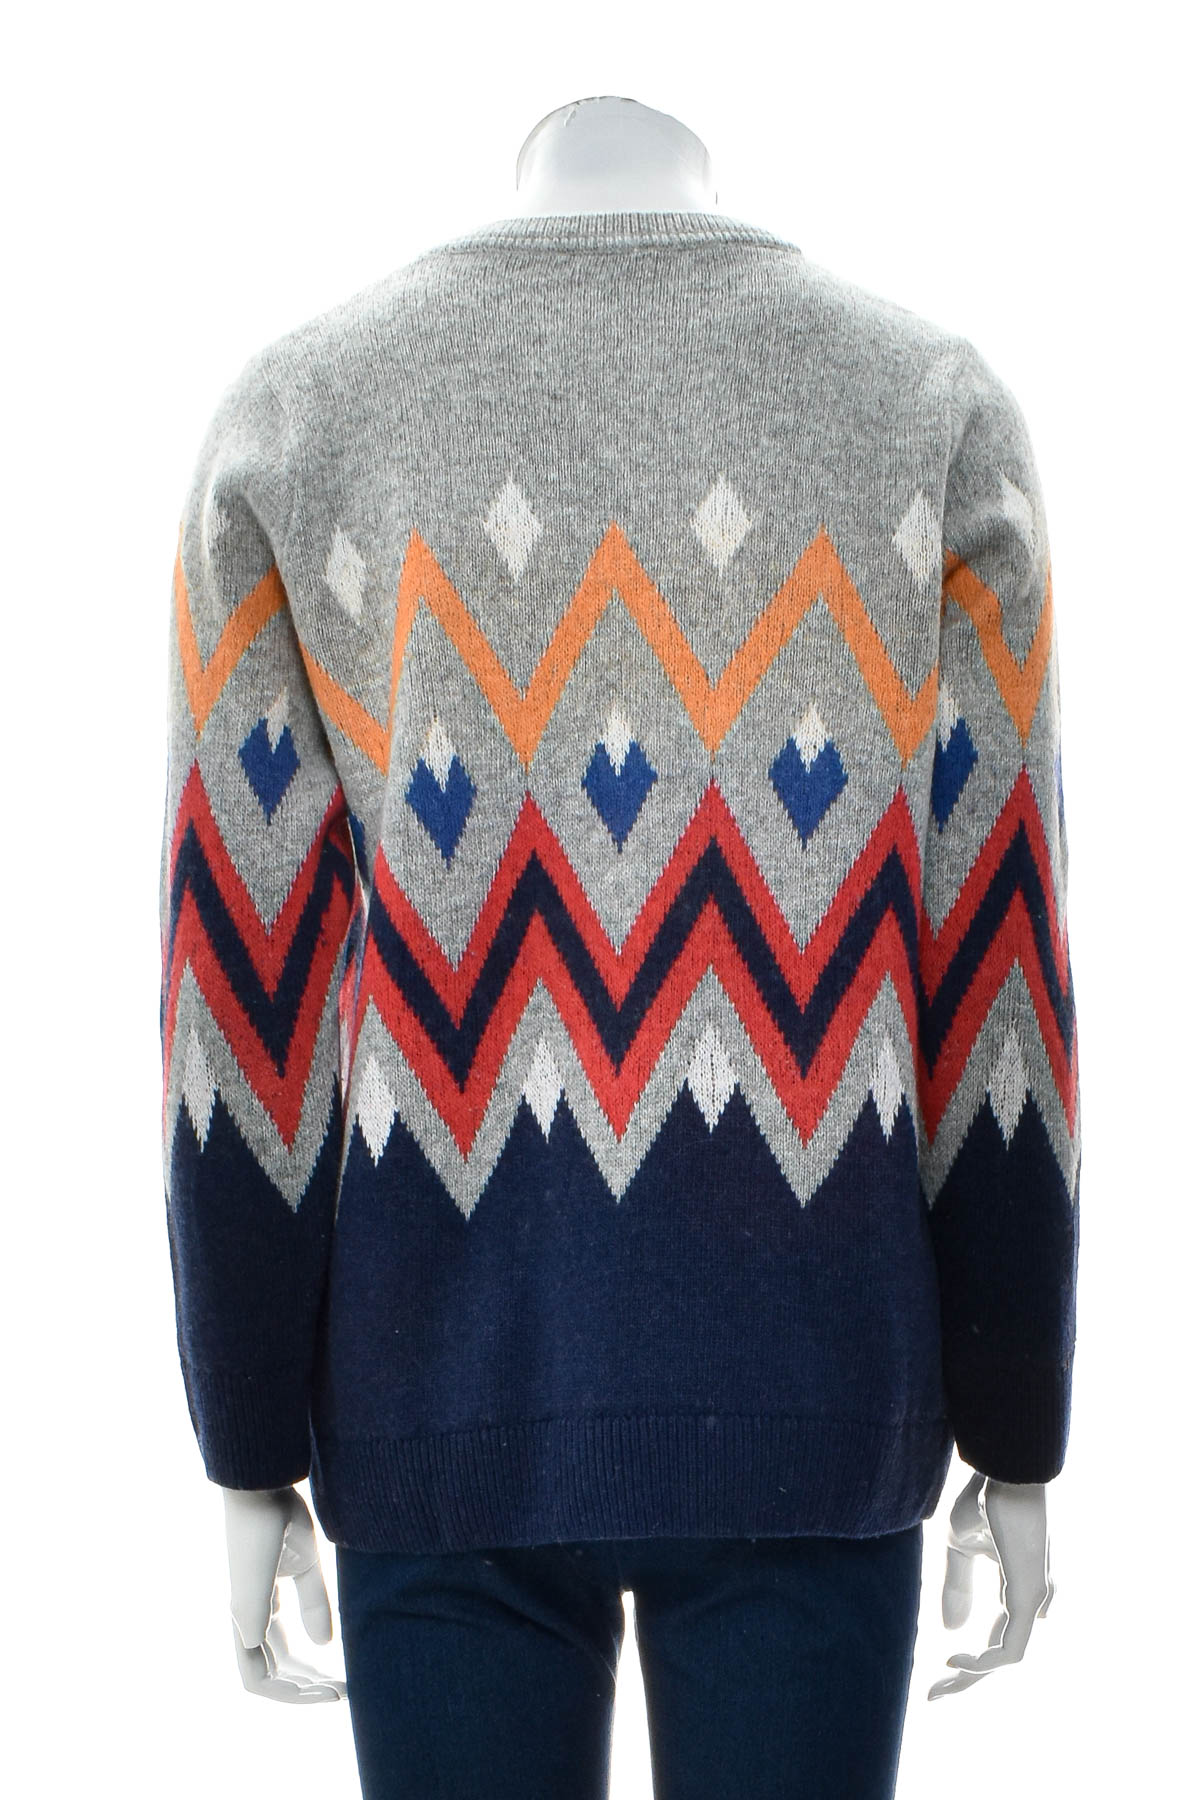 Women's sweater - Walbusch - 1